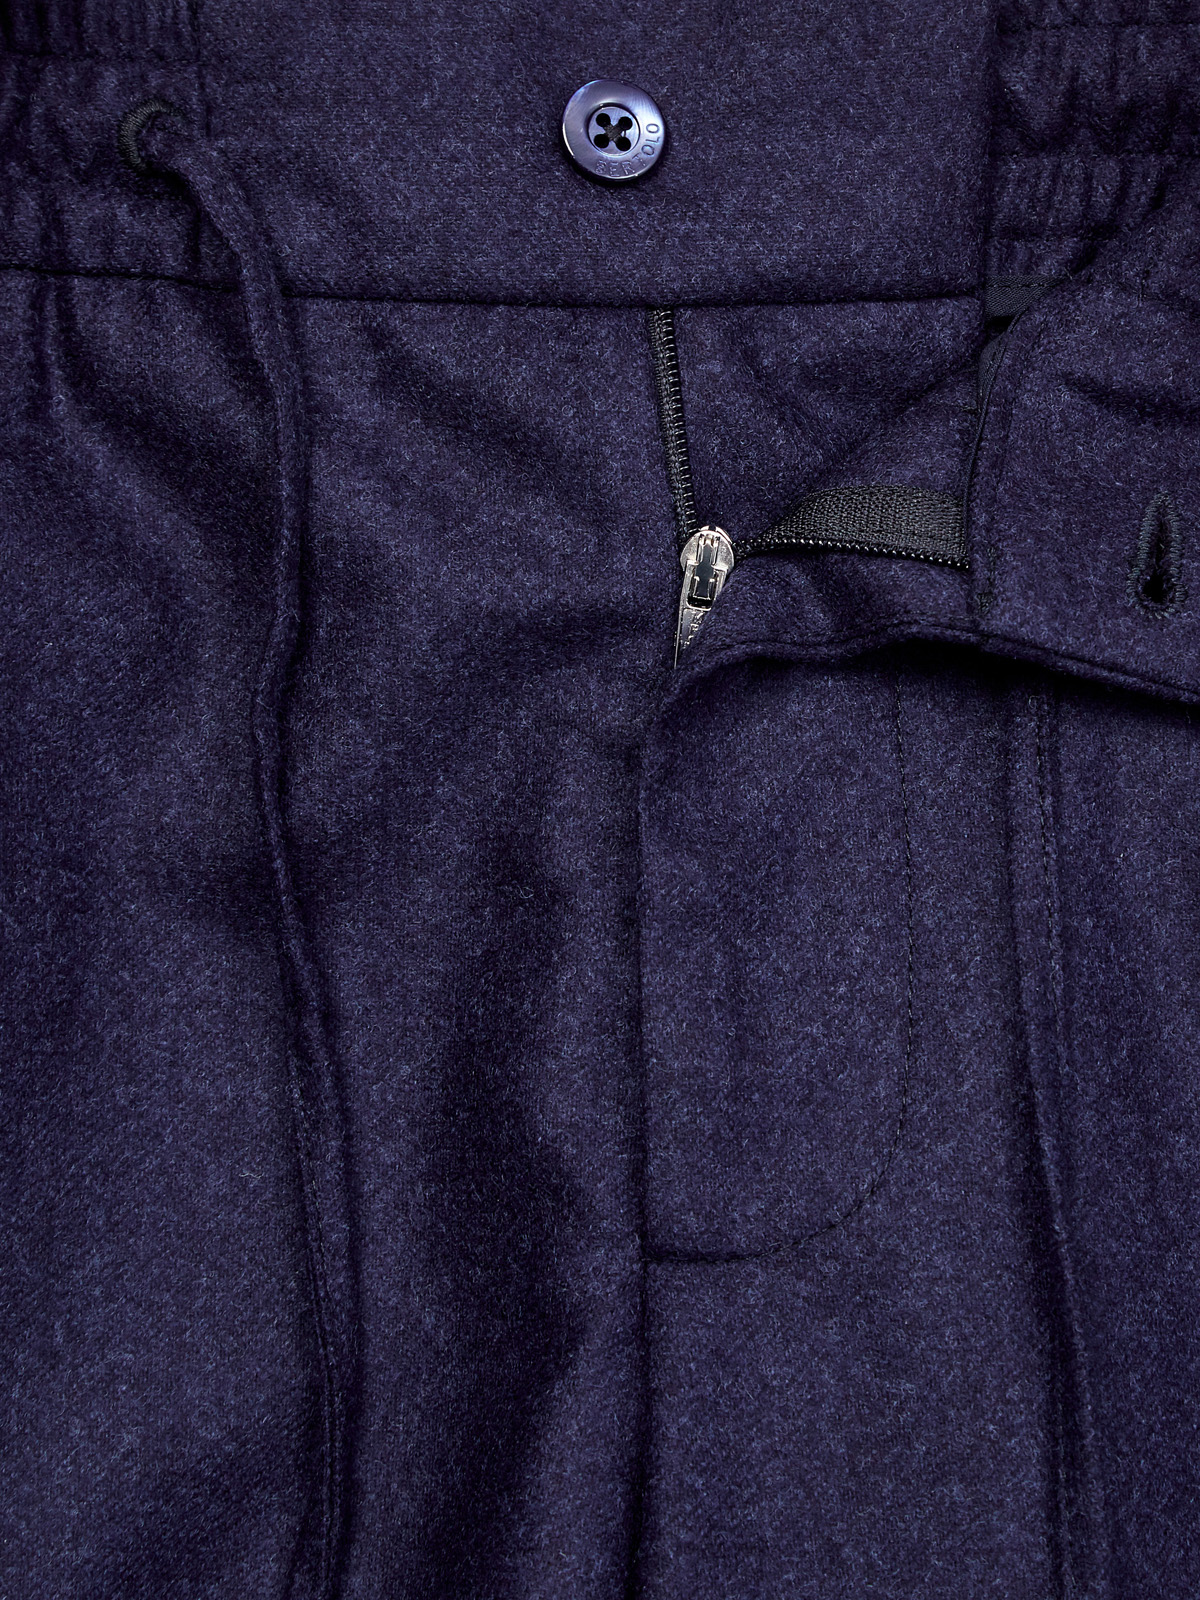 Брюки в стиле sprezzatura из шерстяной ткани BERTOLO CASHMERE, цвет синий, размер 50;52;54;56;58;60 - фото 7